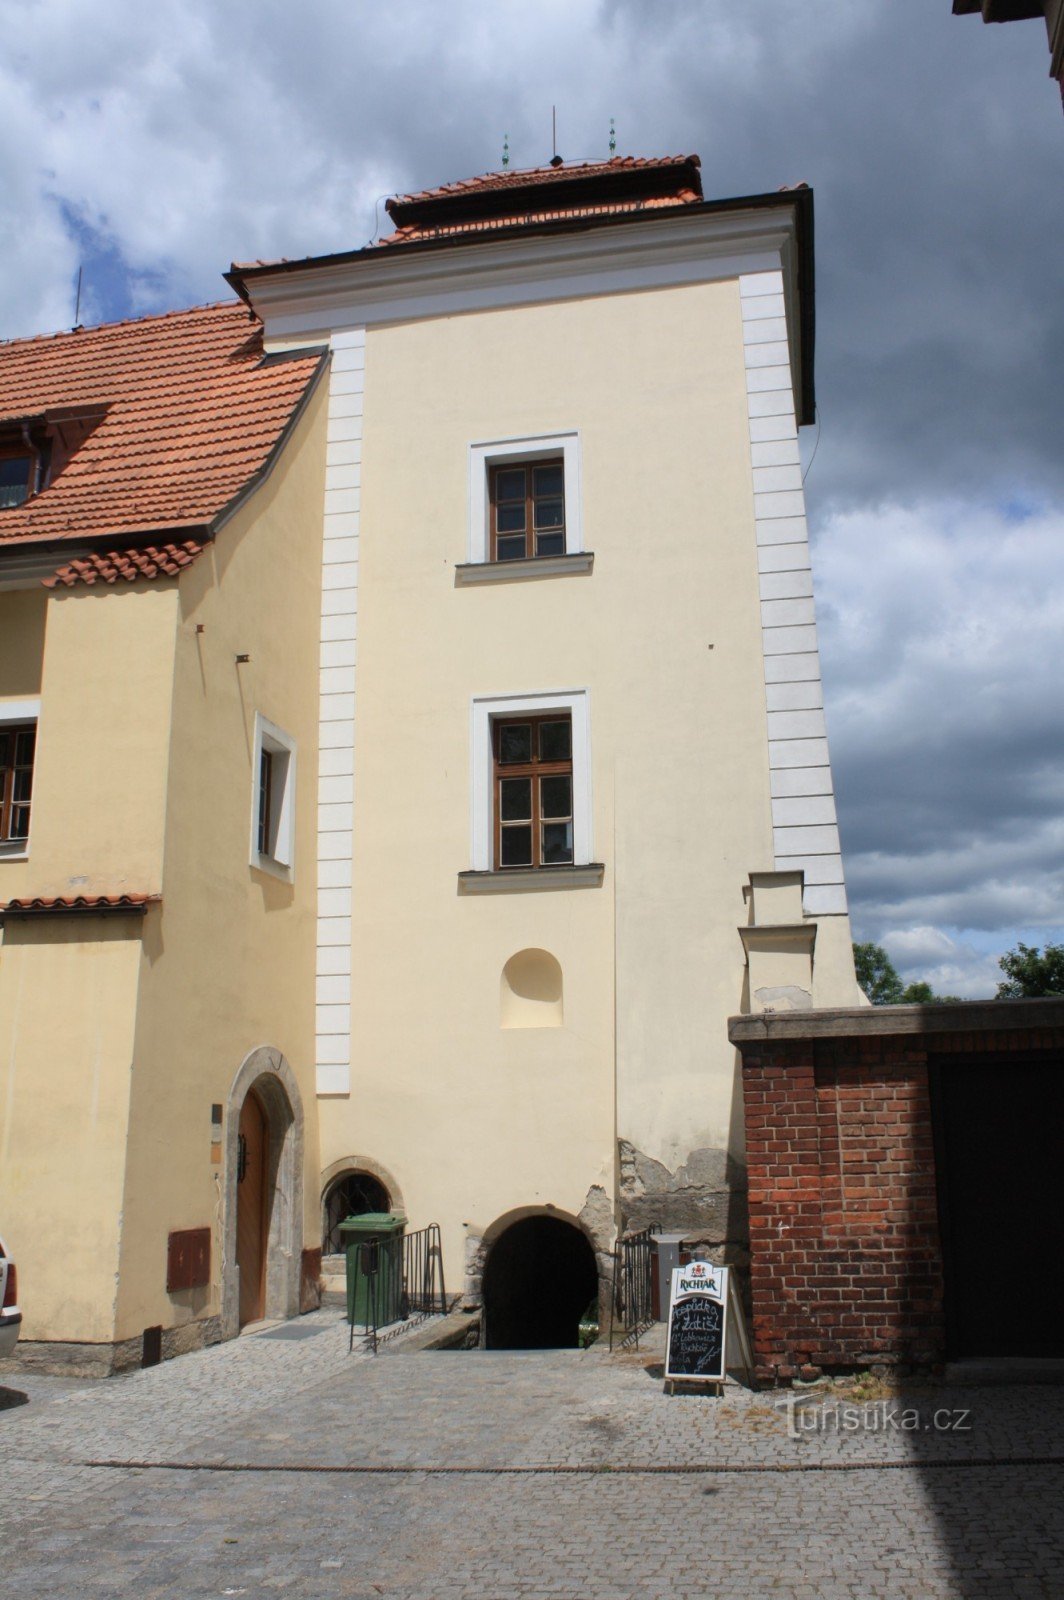 Chrudim - Tower with Pardubska Fort